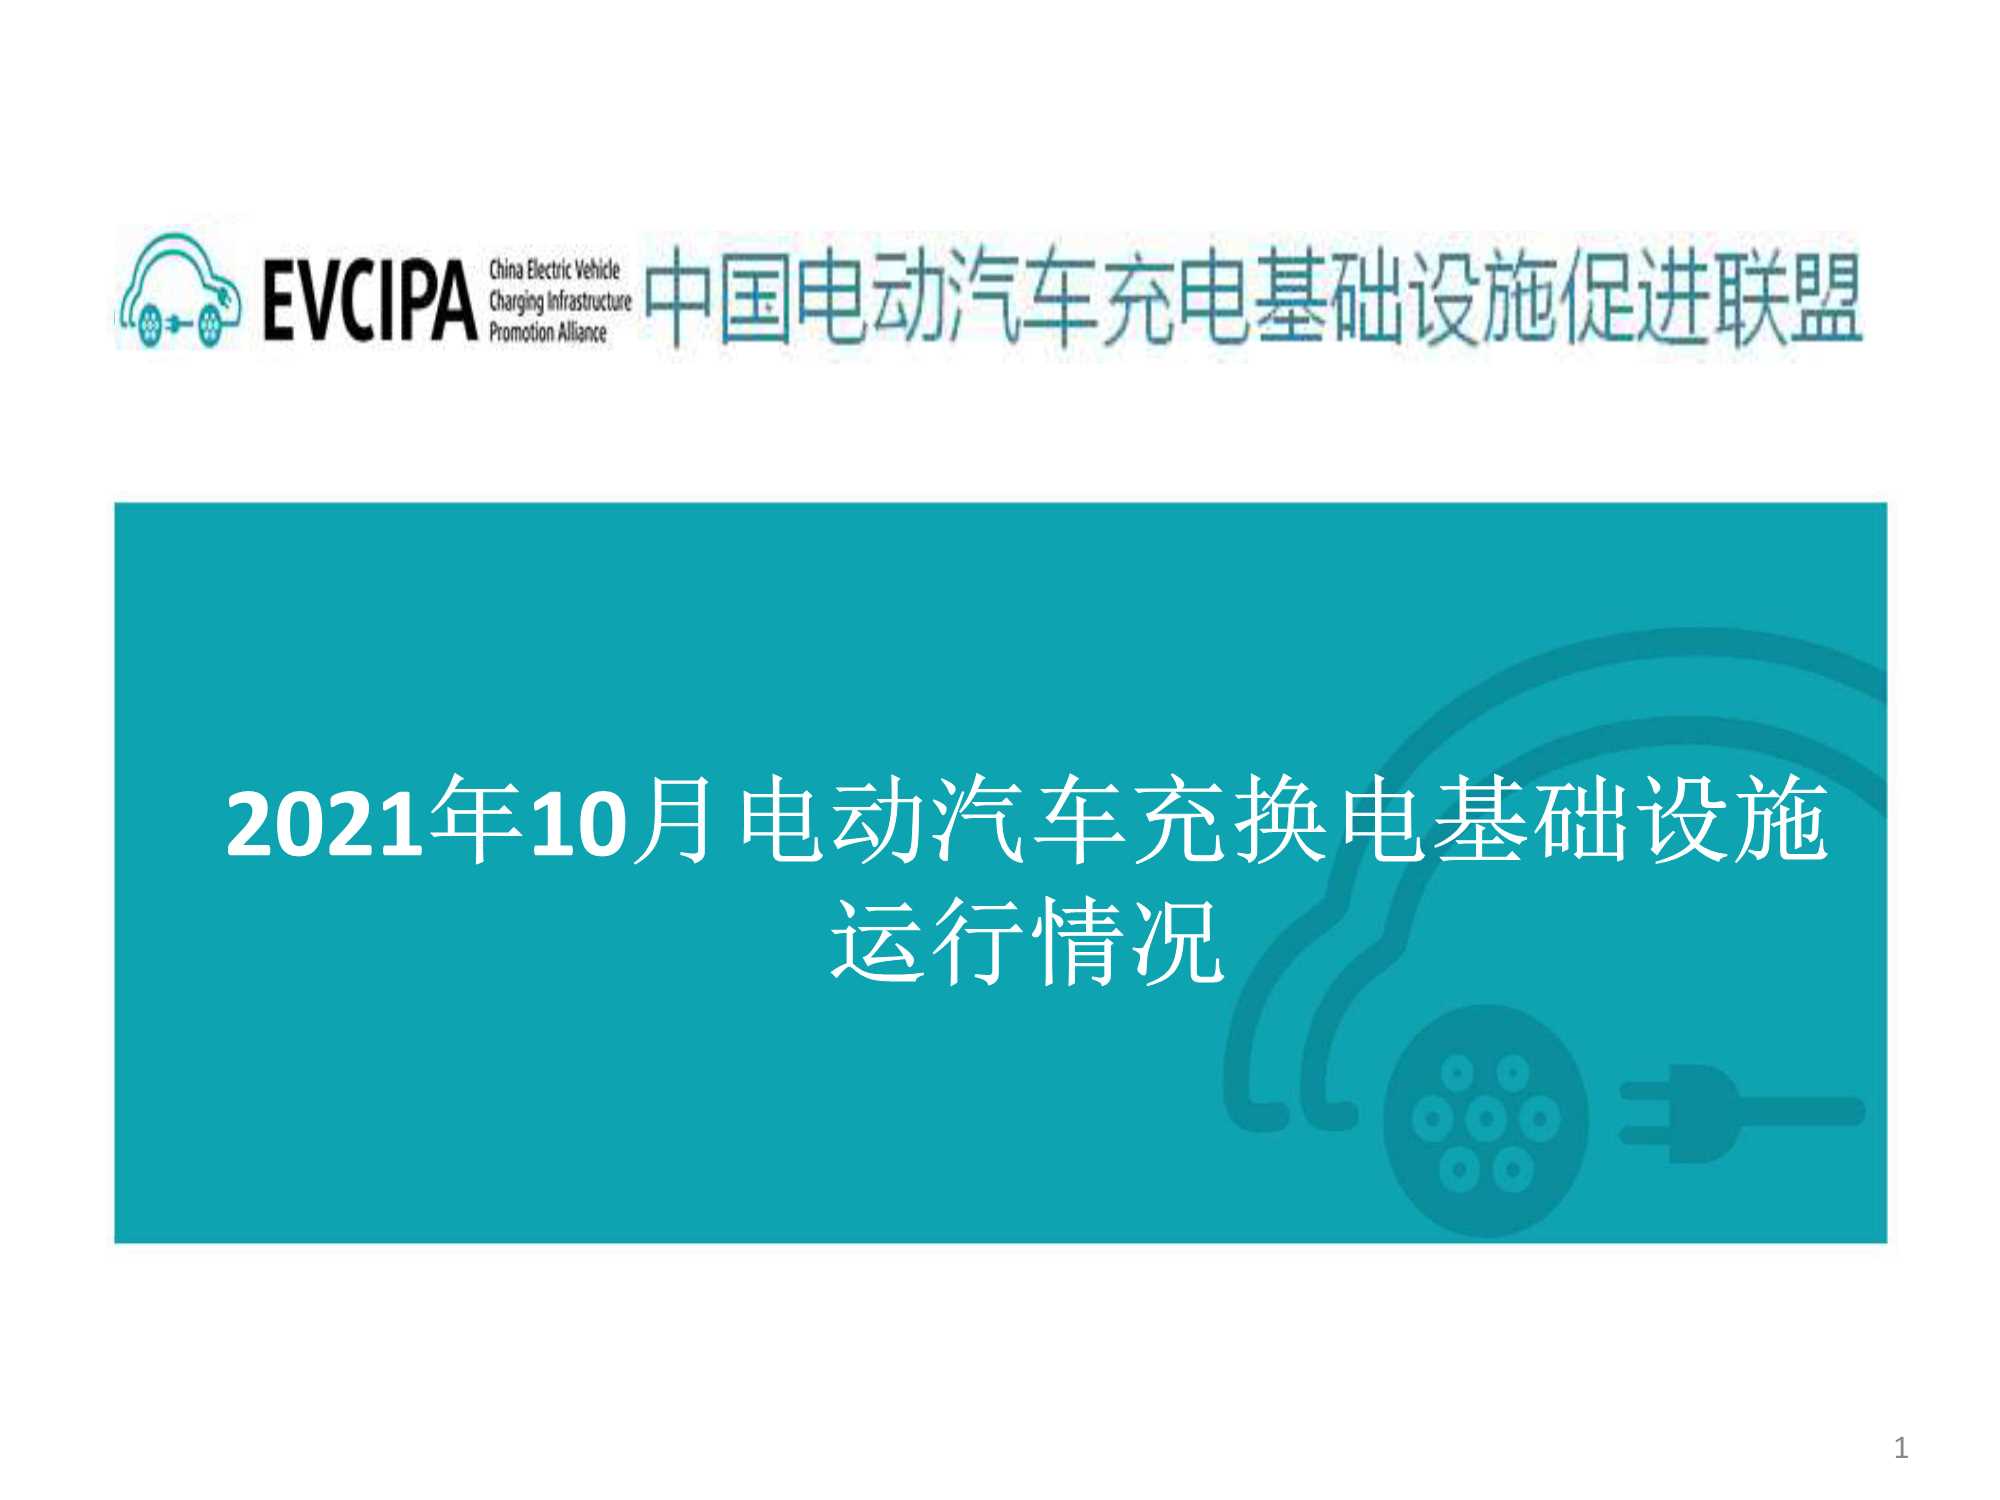 EVCIPA-2021年10月电动汽车充换电基础设施运行情况-2021.12-31页